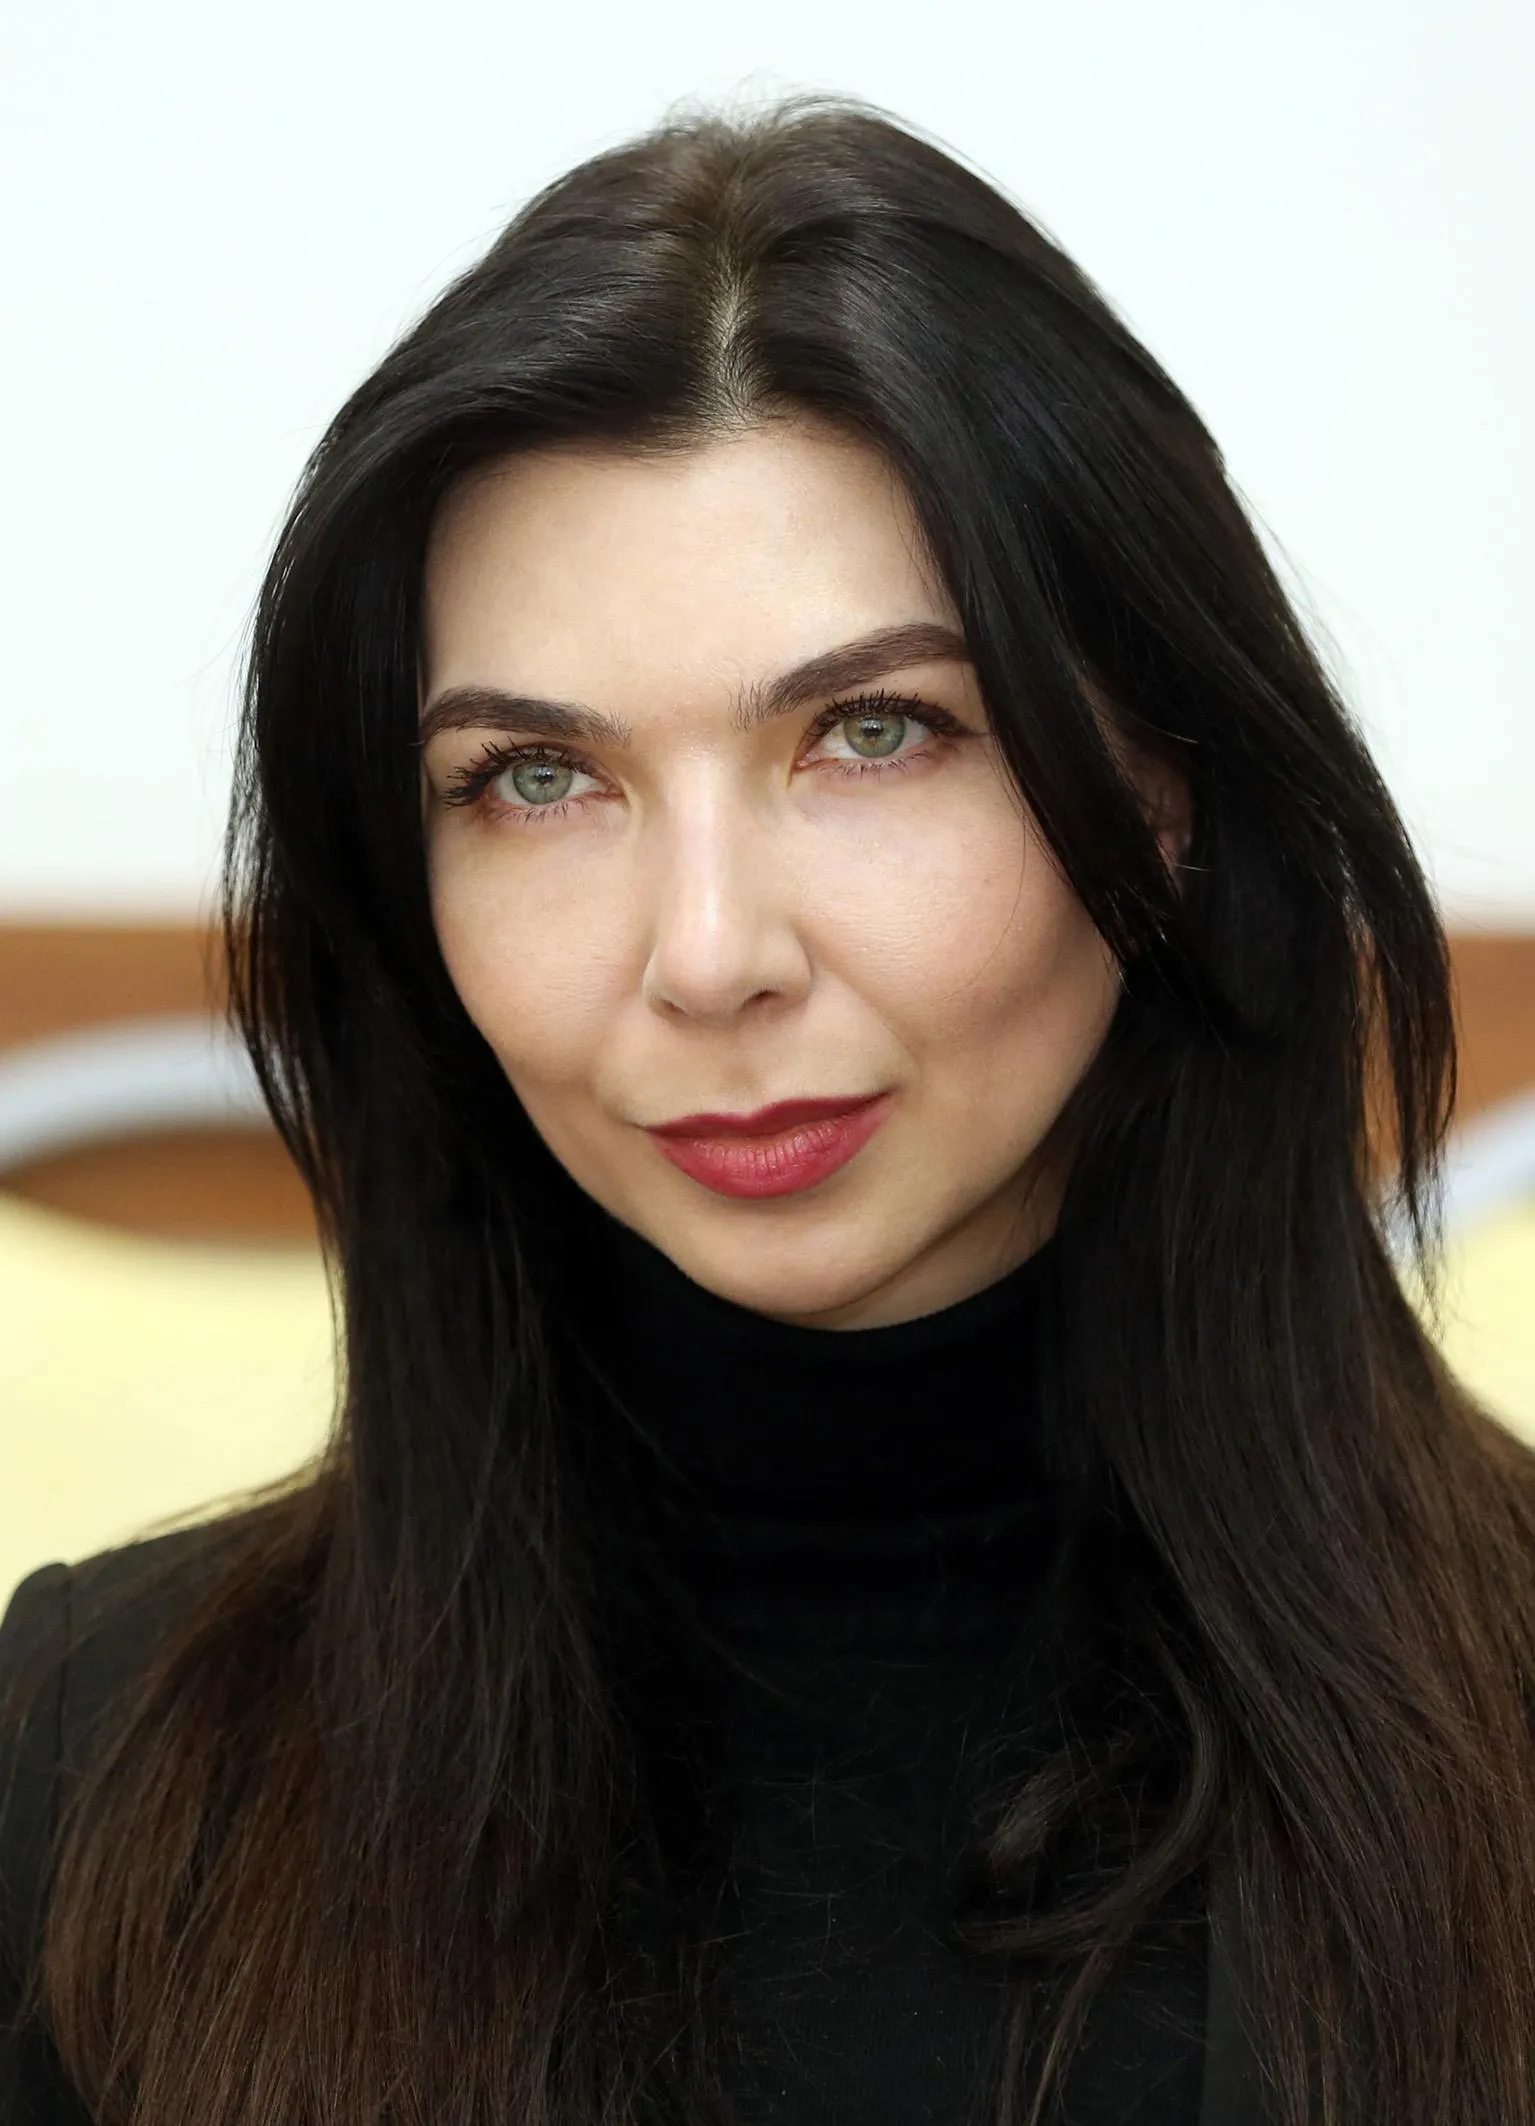 Тетяна Ковальчук